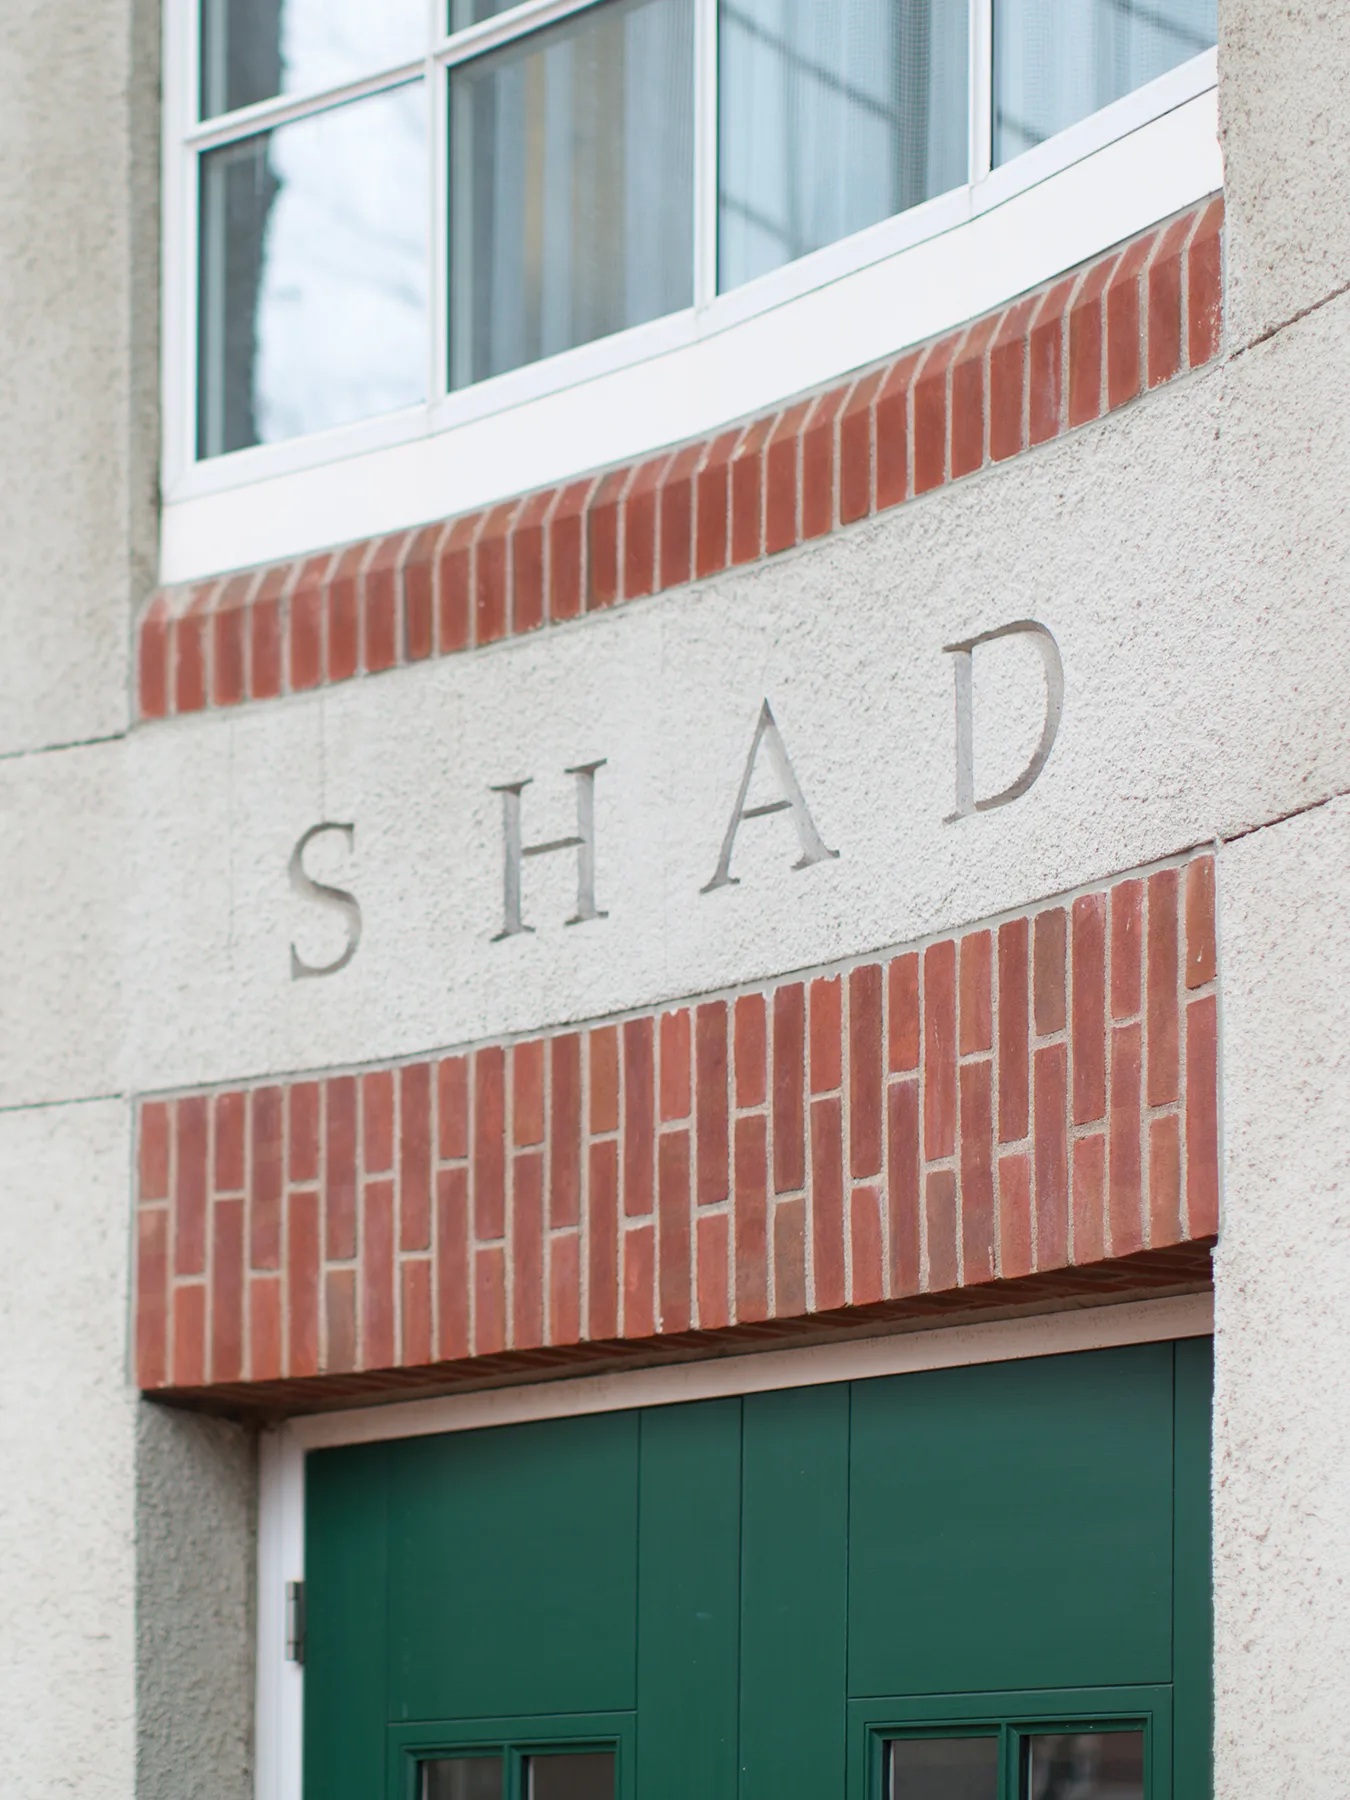 Shad Hall building name inscription